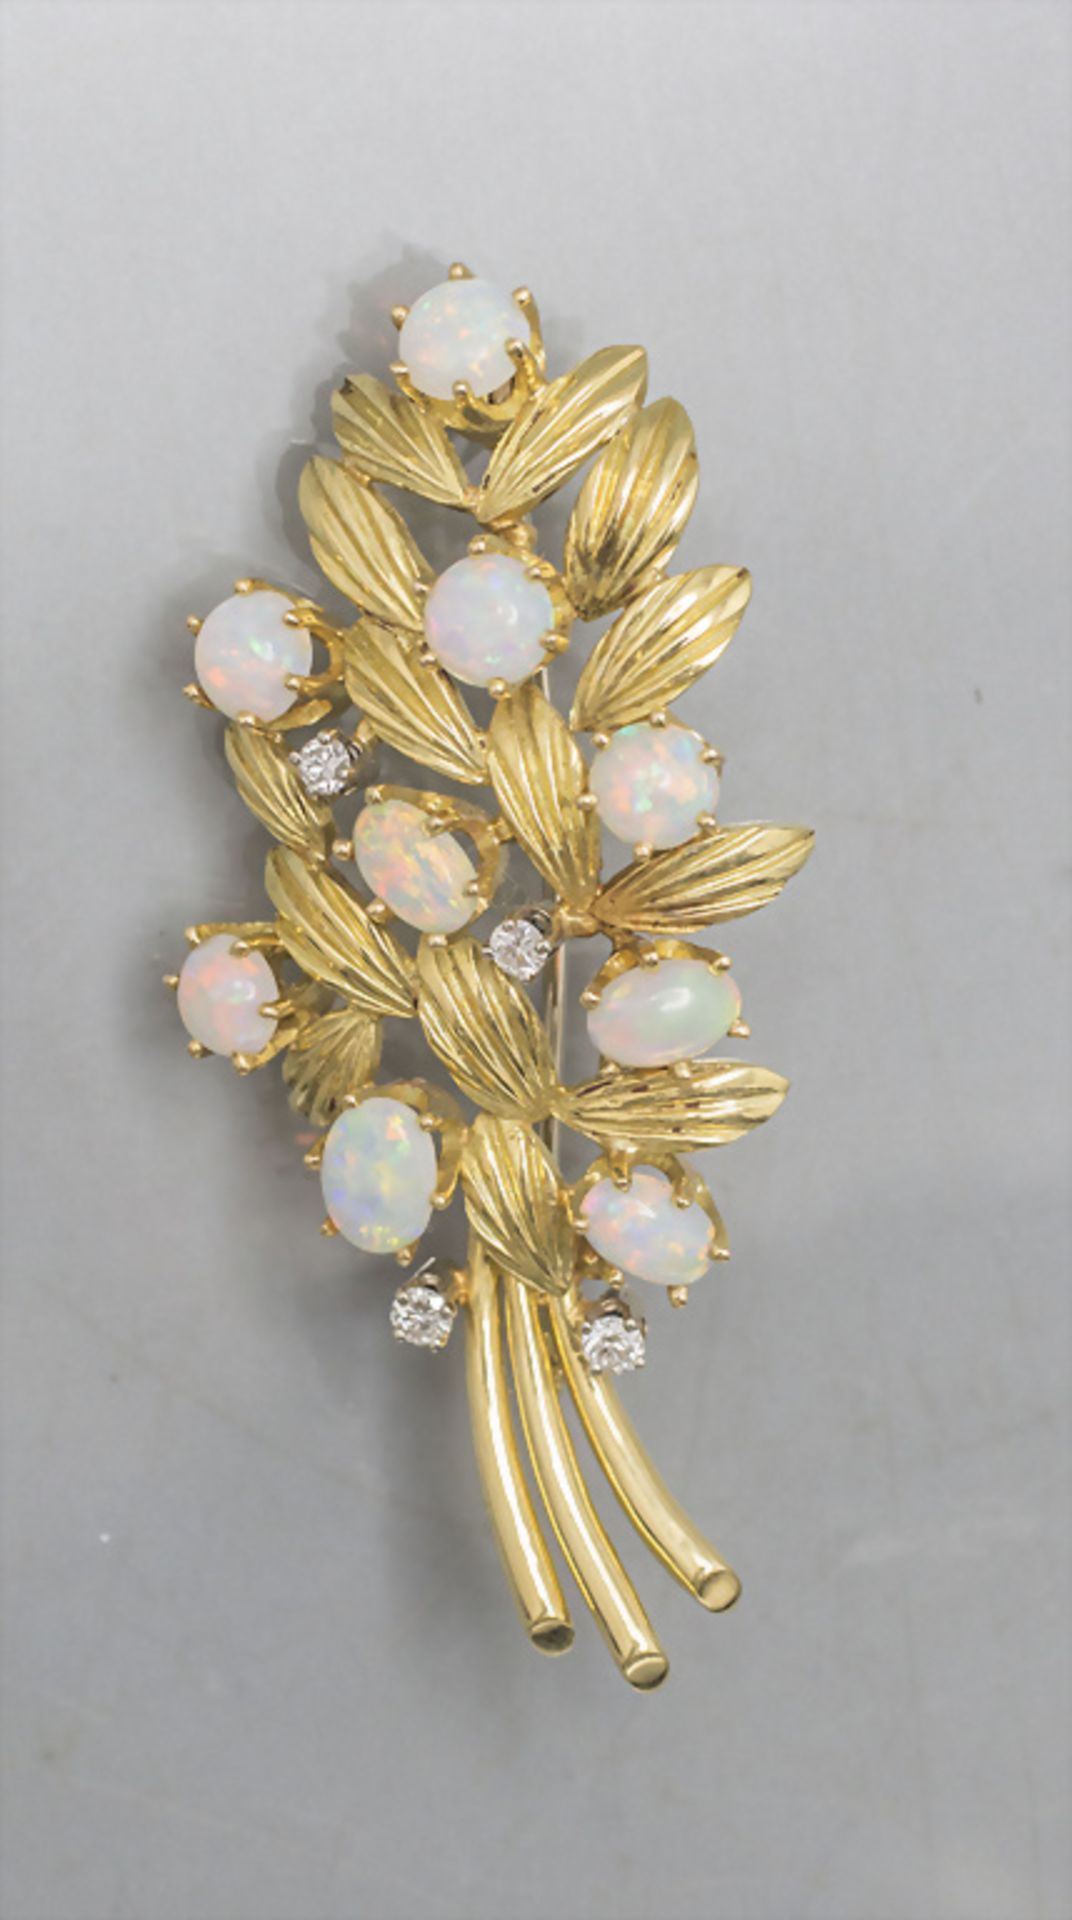 Goldbrosche mit Opalen und Diamanten / An 18 ct gold brooch with opal and diamonds